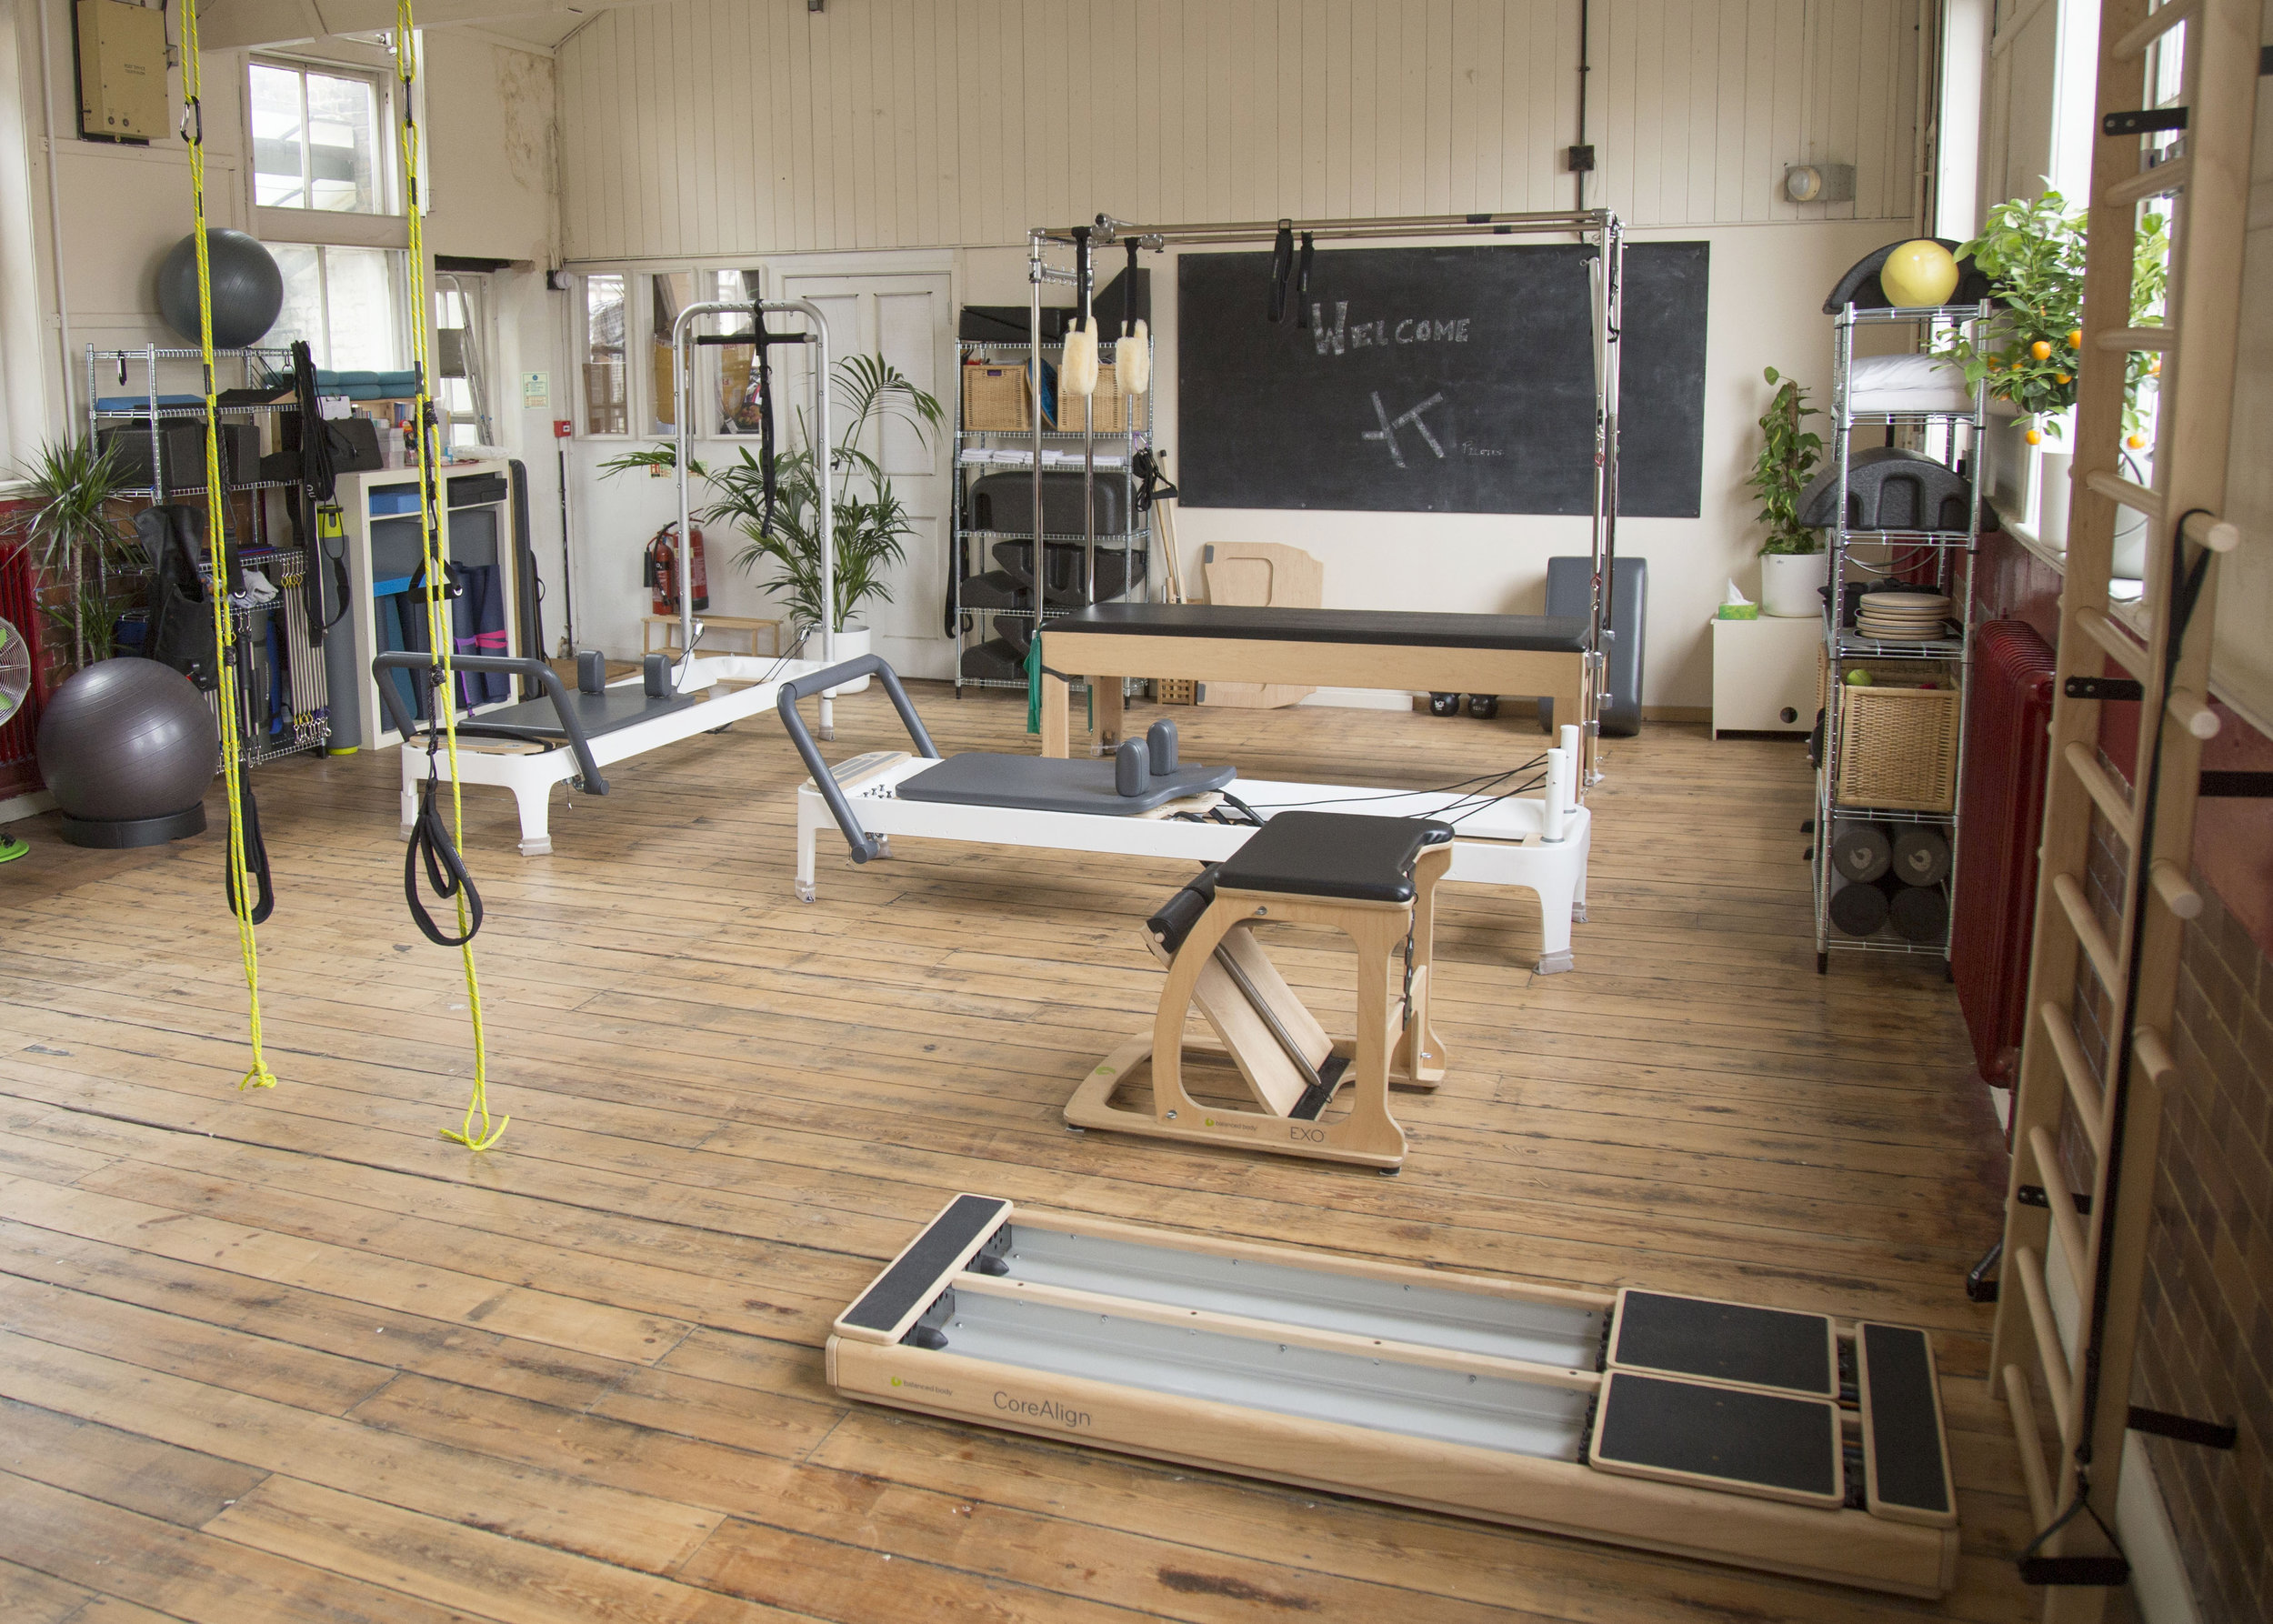  Pilates studio in Wapping, London 